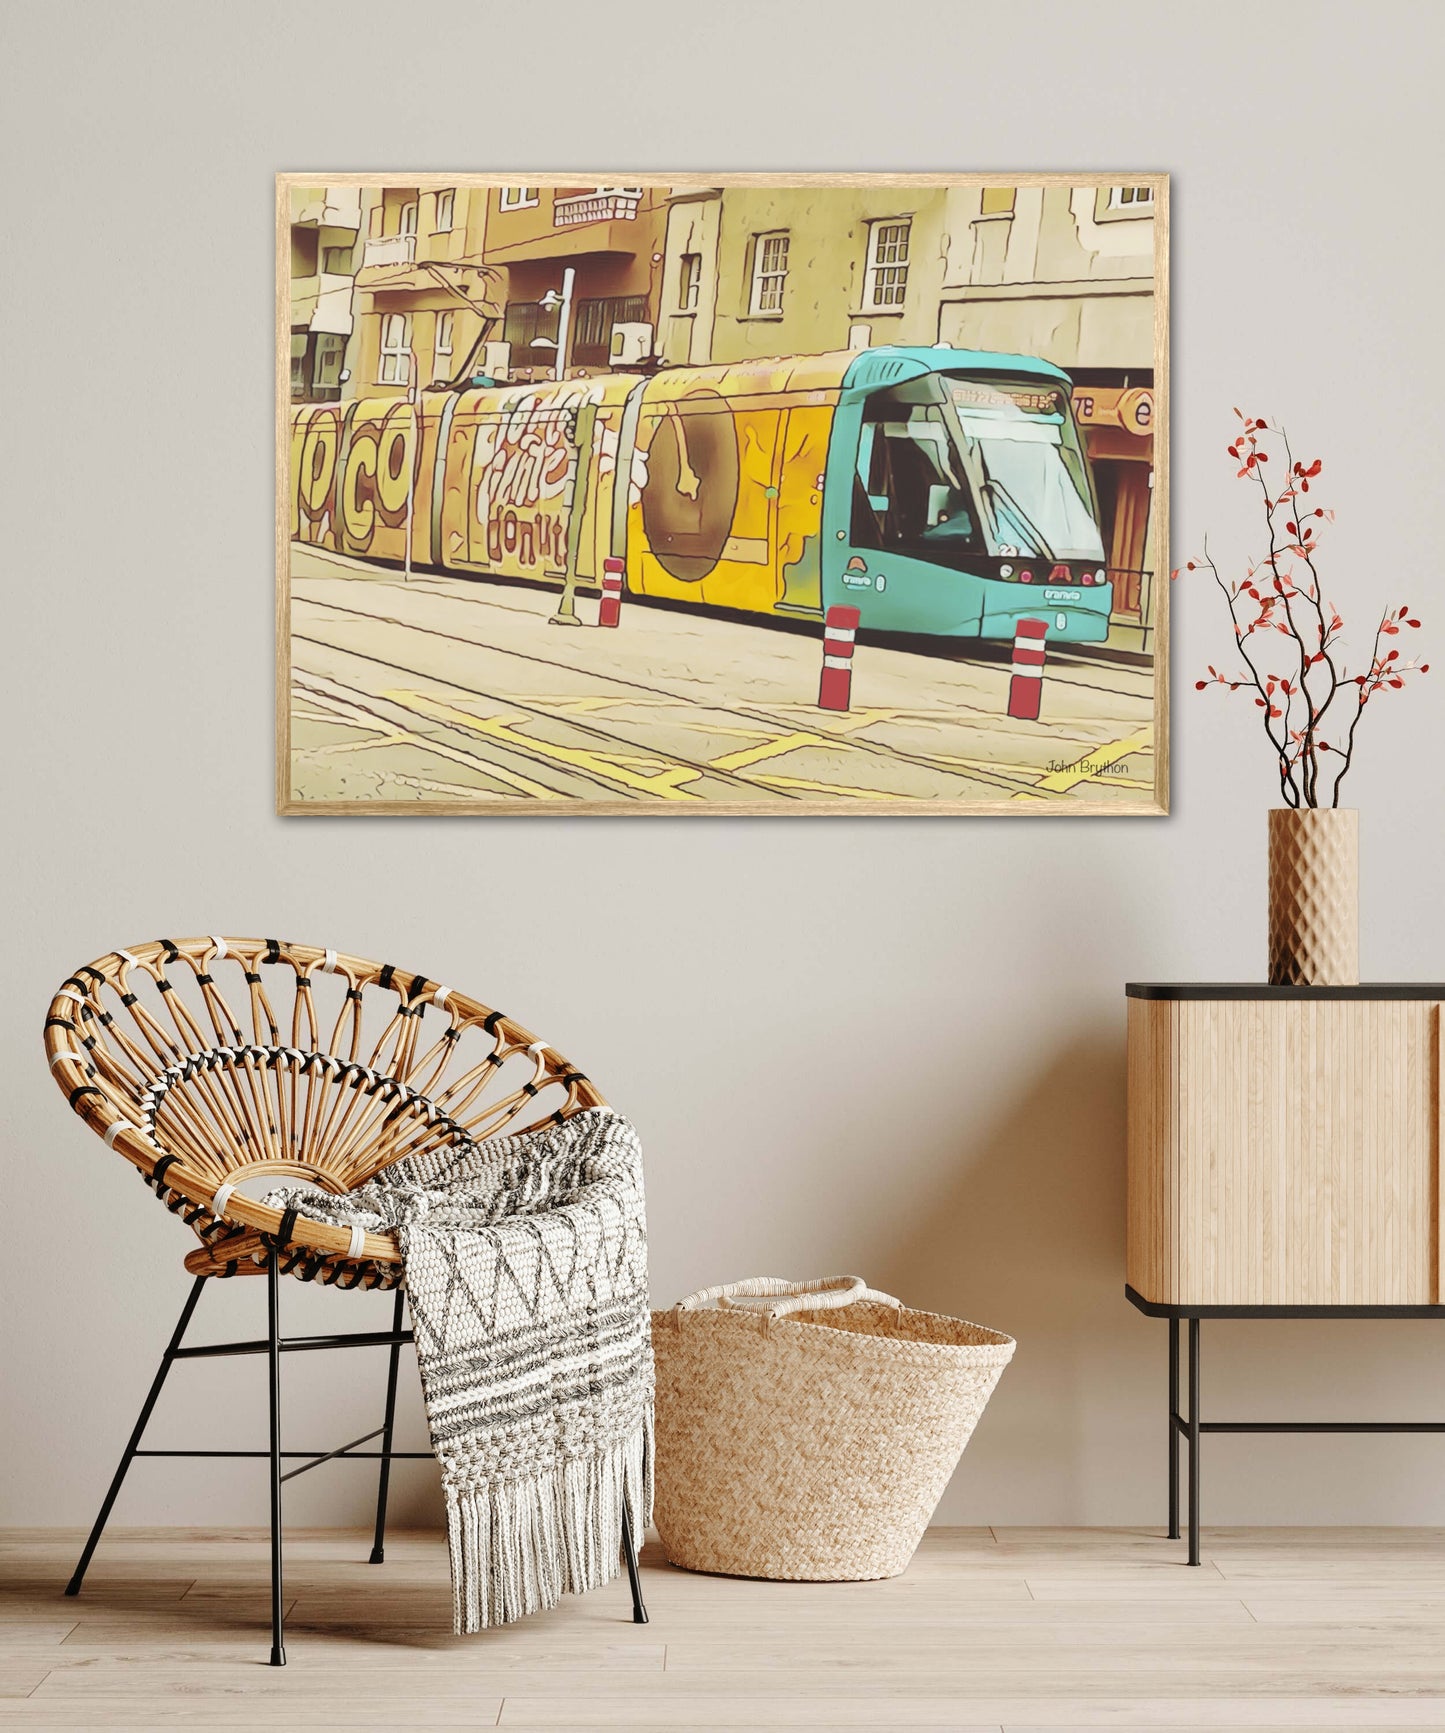 Yellow Tram With Graffiti Artwork by John Brython